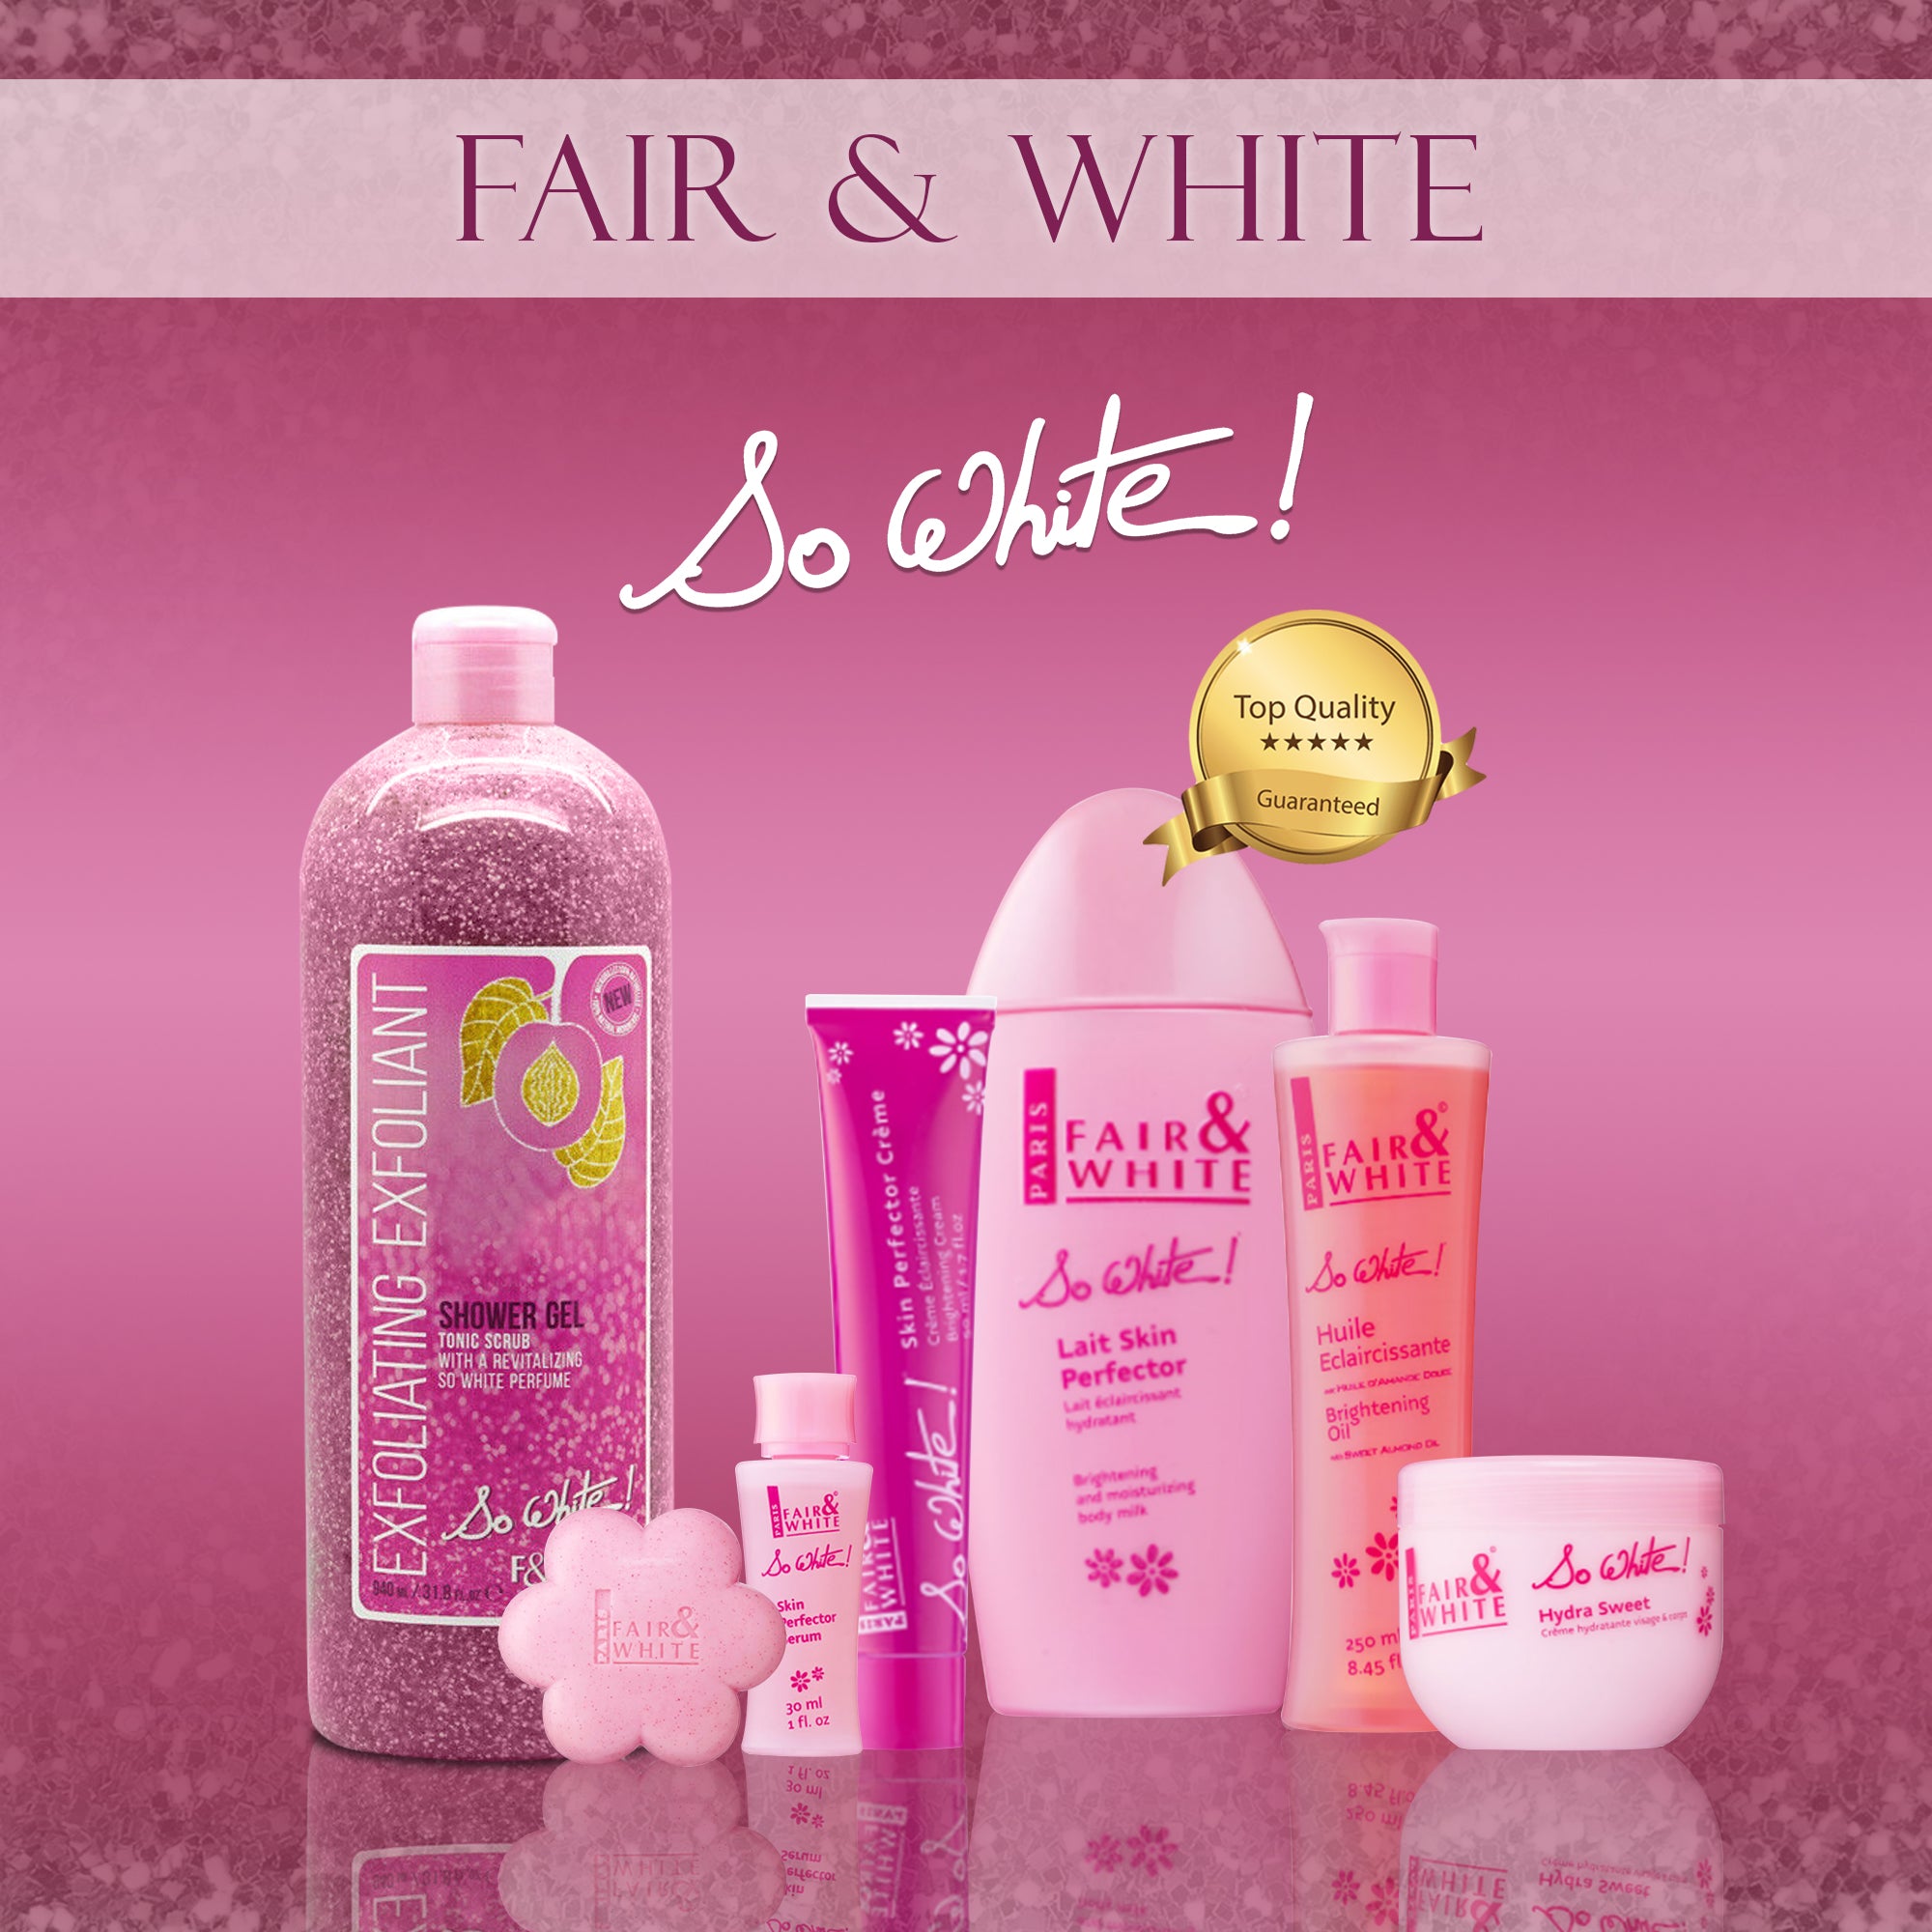 Fair and White So White! Exfoliating Shower Gel Tonic Scrub - 940 ml